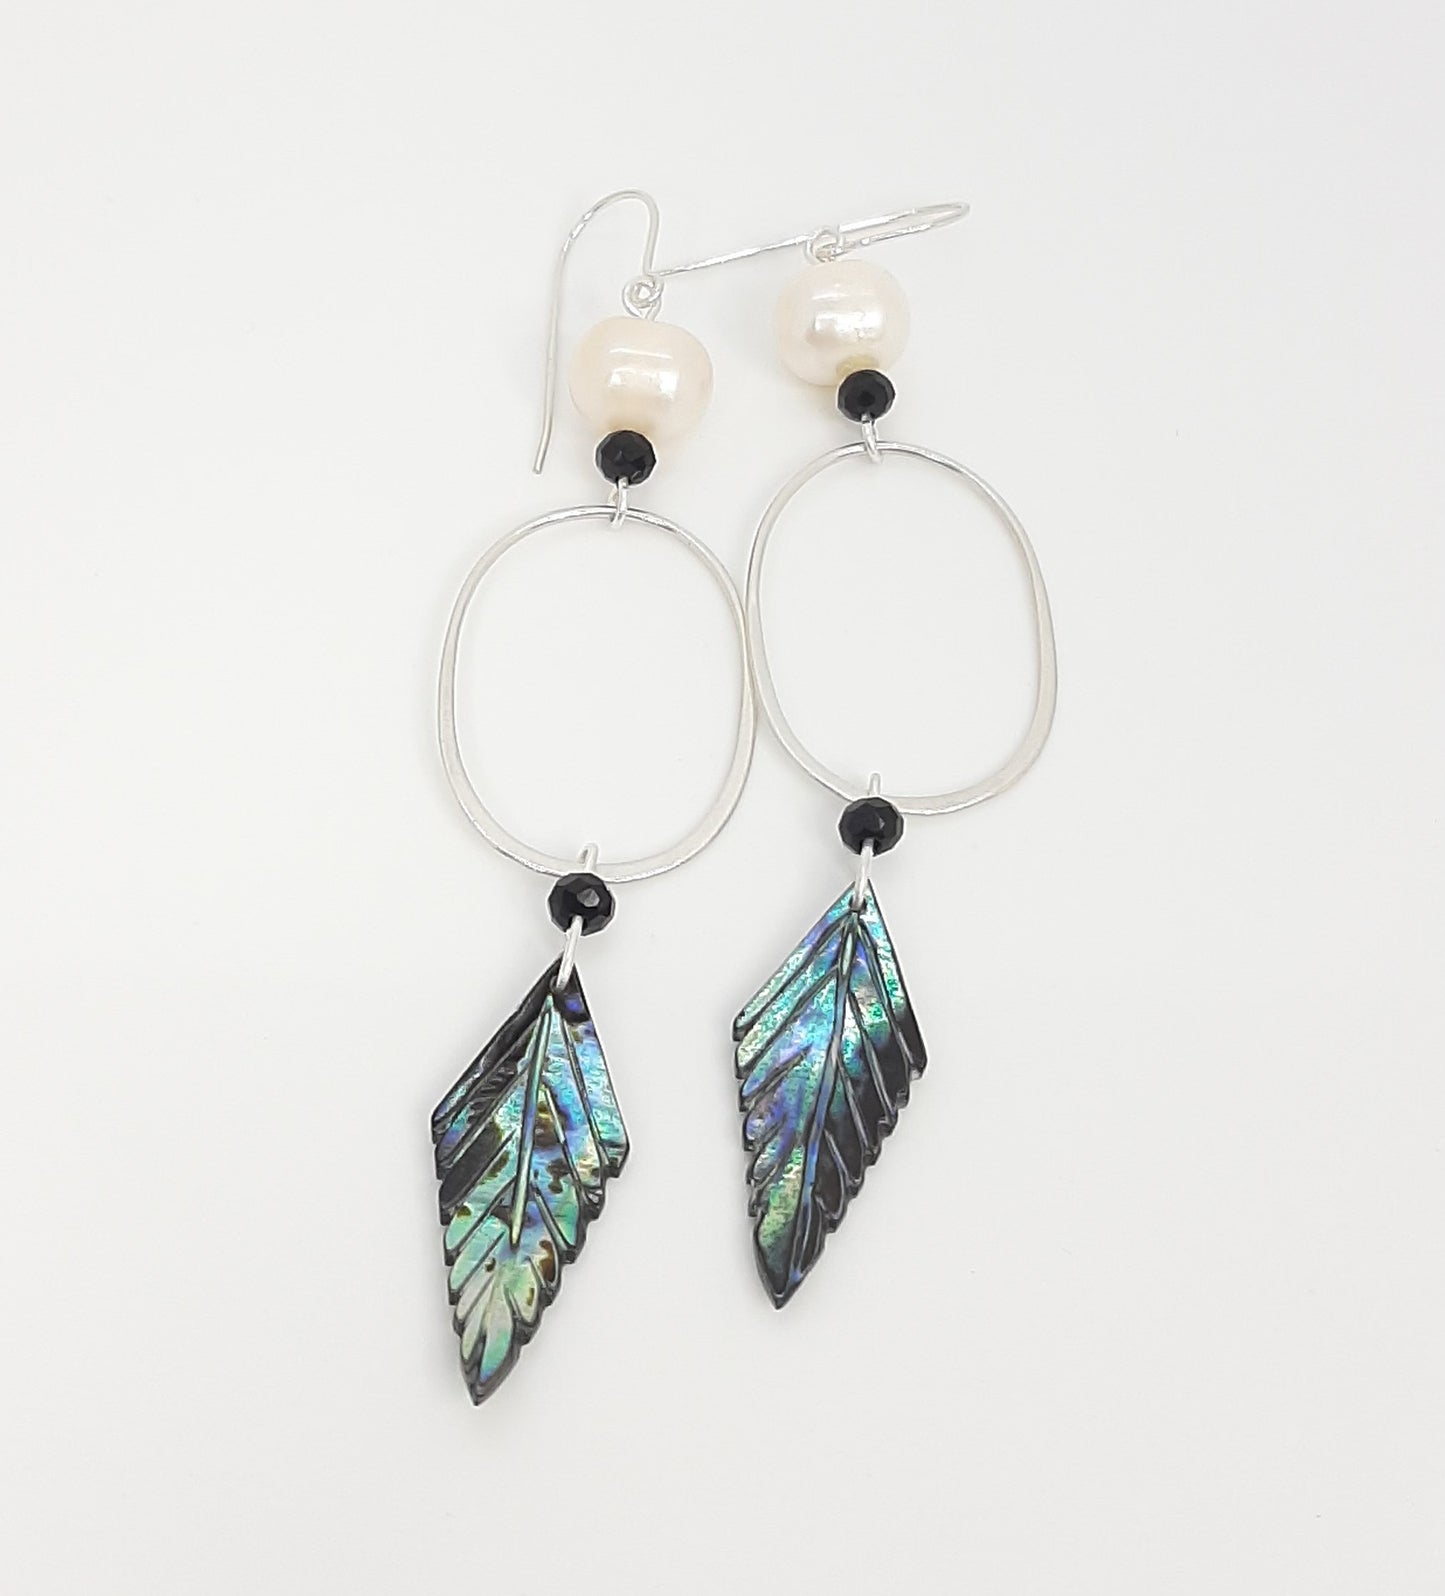 Abolone + Freshwater Pearls + Sterling Silver Oval Link Earrings